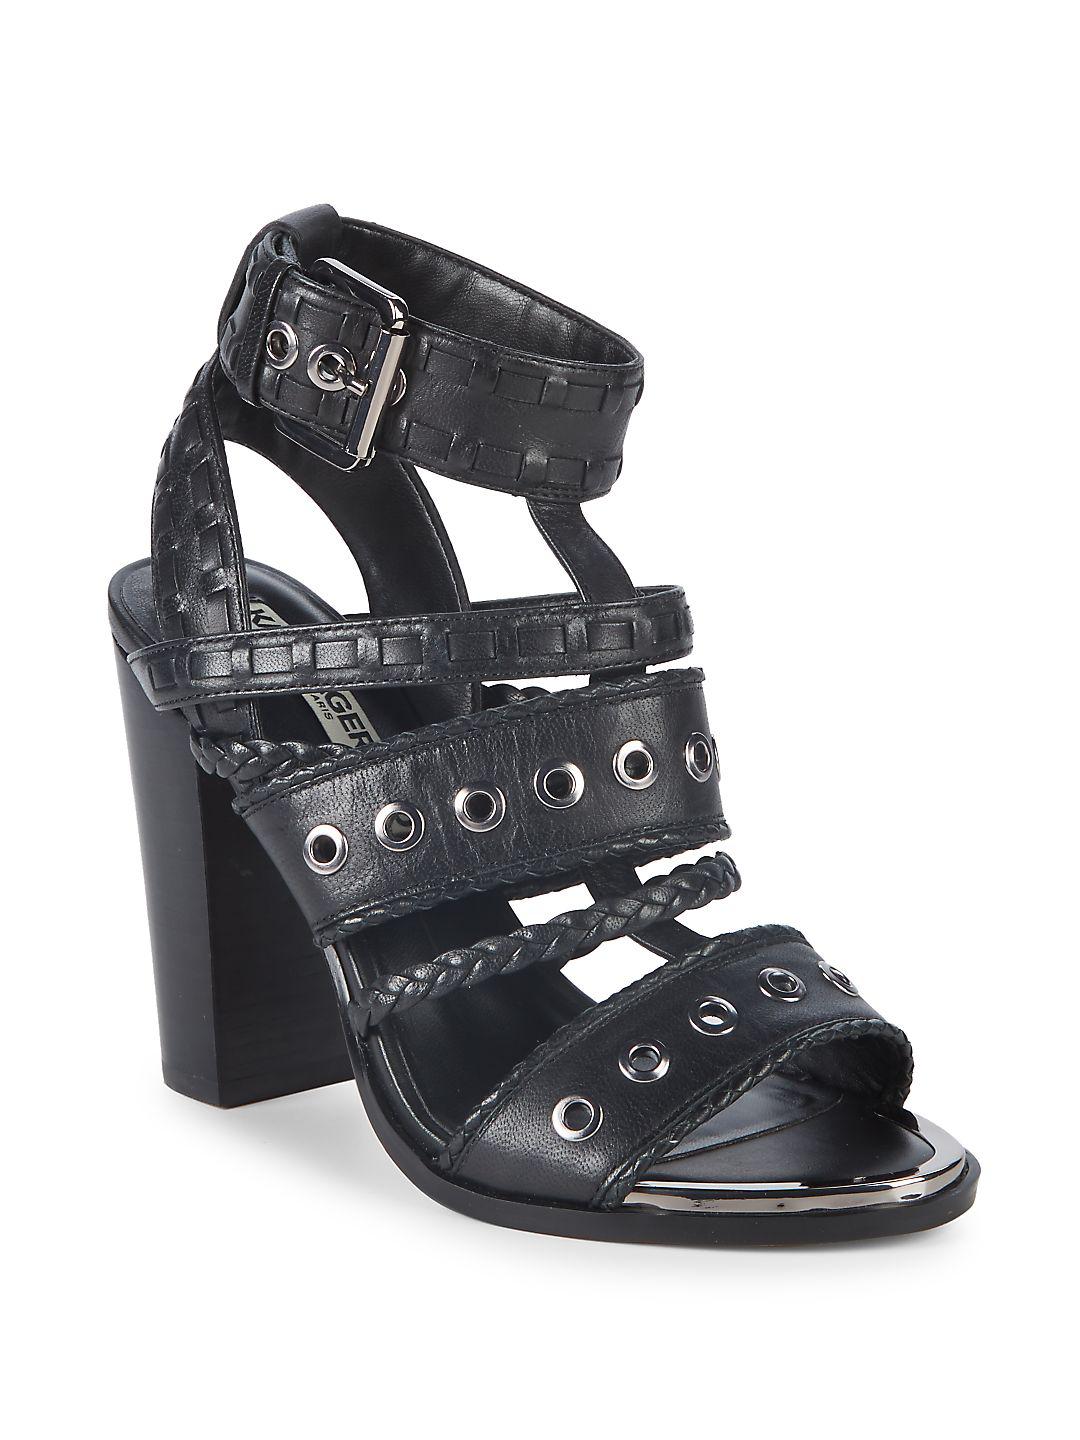 Karl Lagerfeld Leonie Leather Block Heel Sandals in Black - Lyst